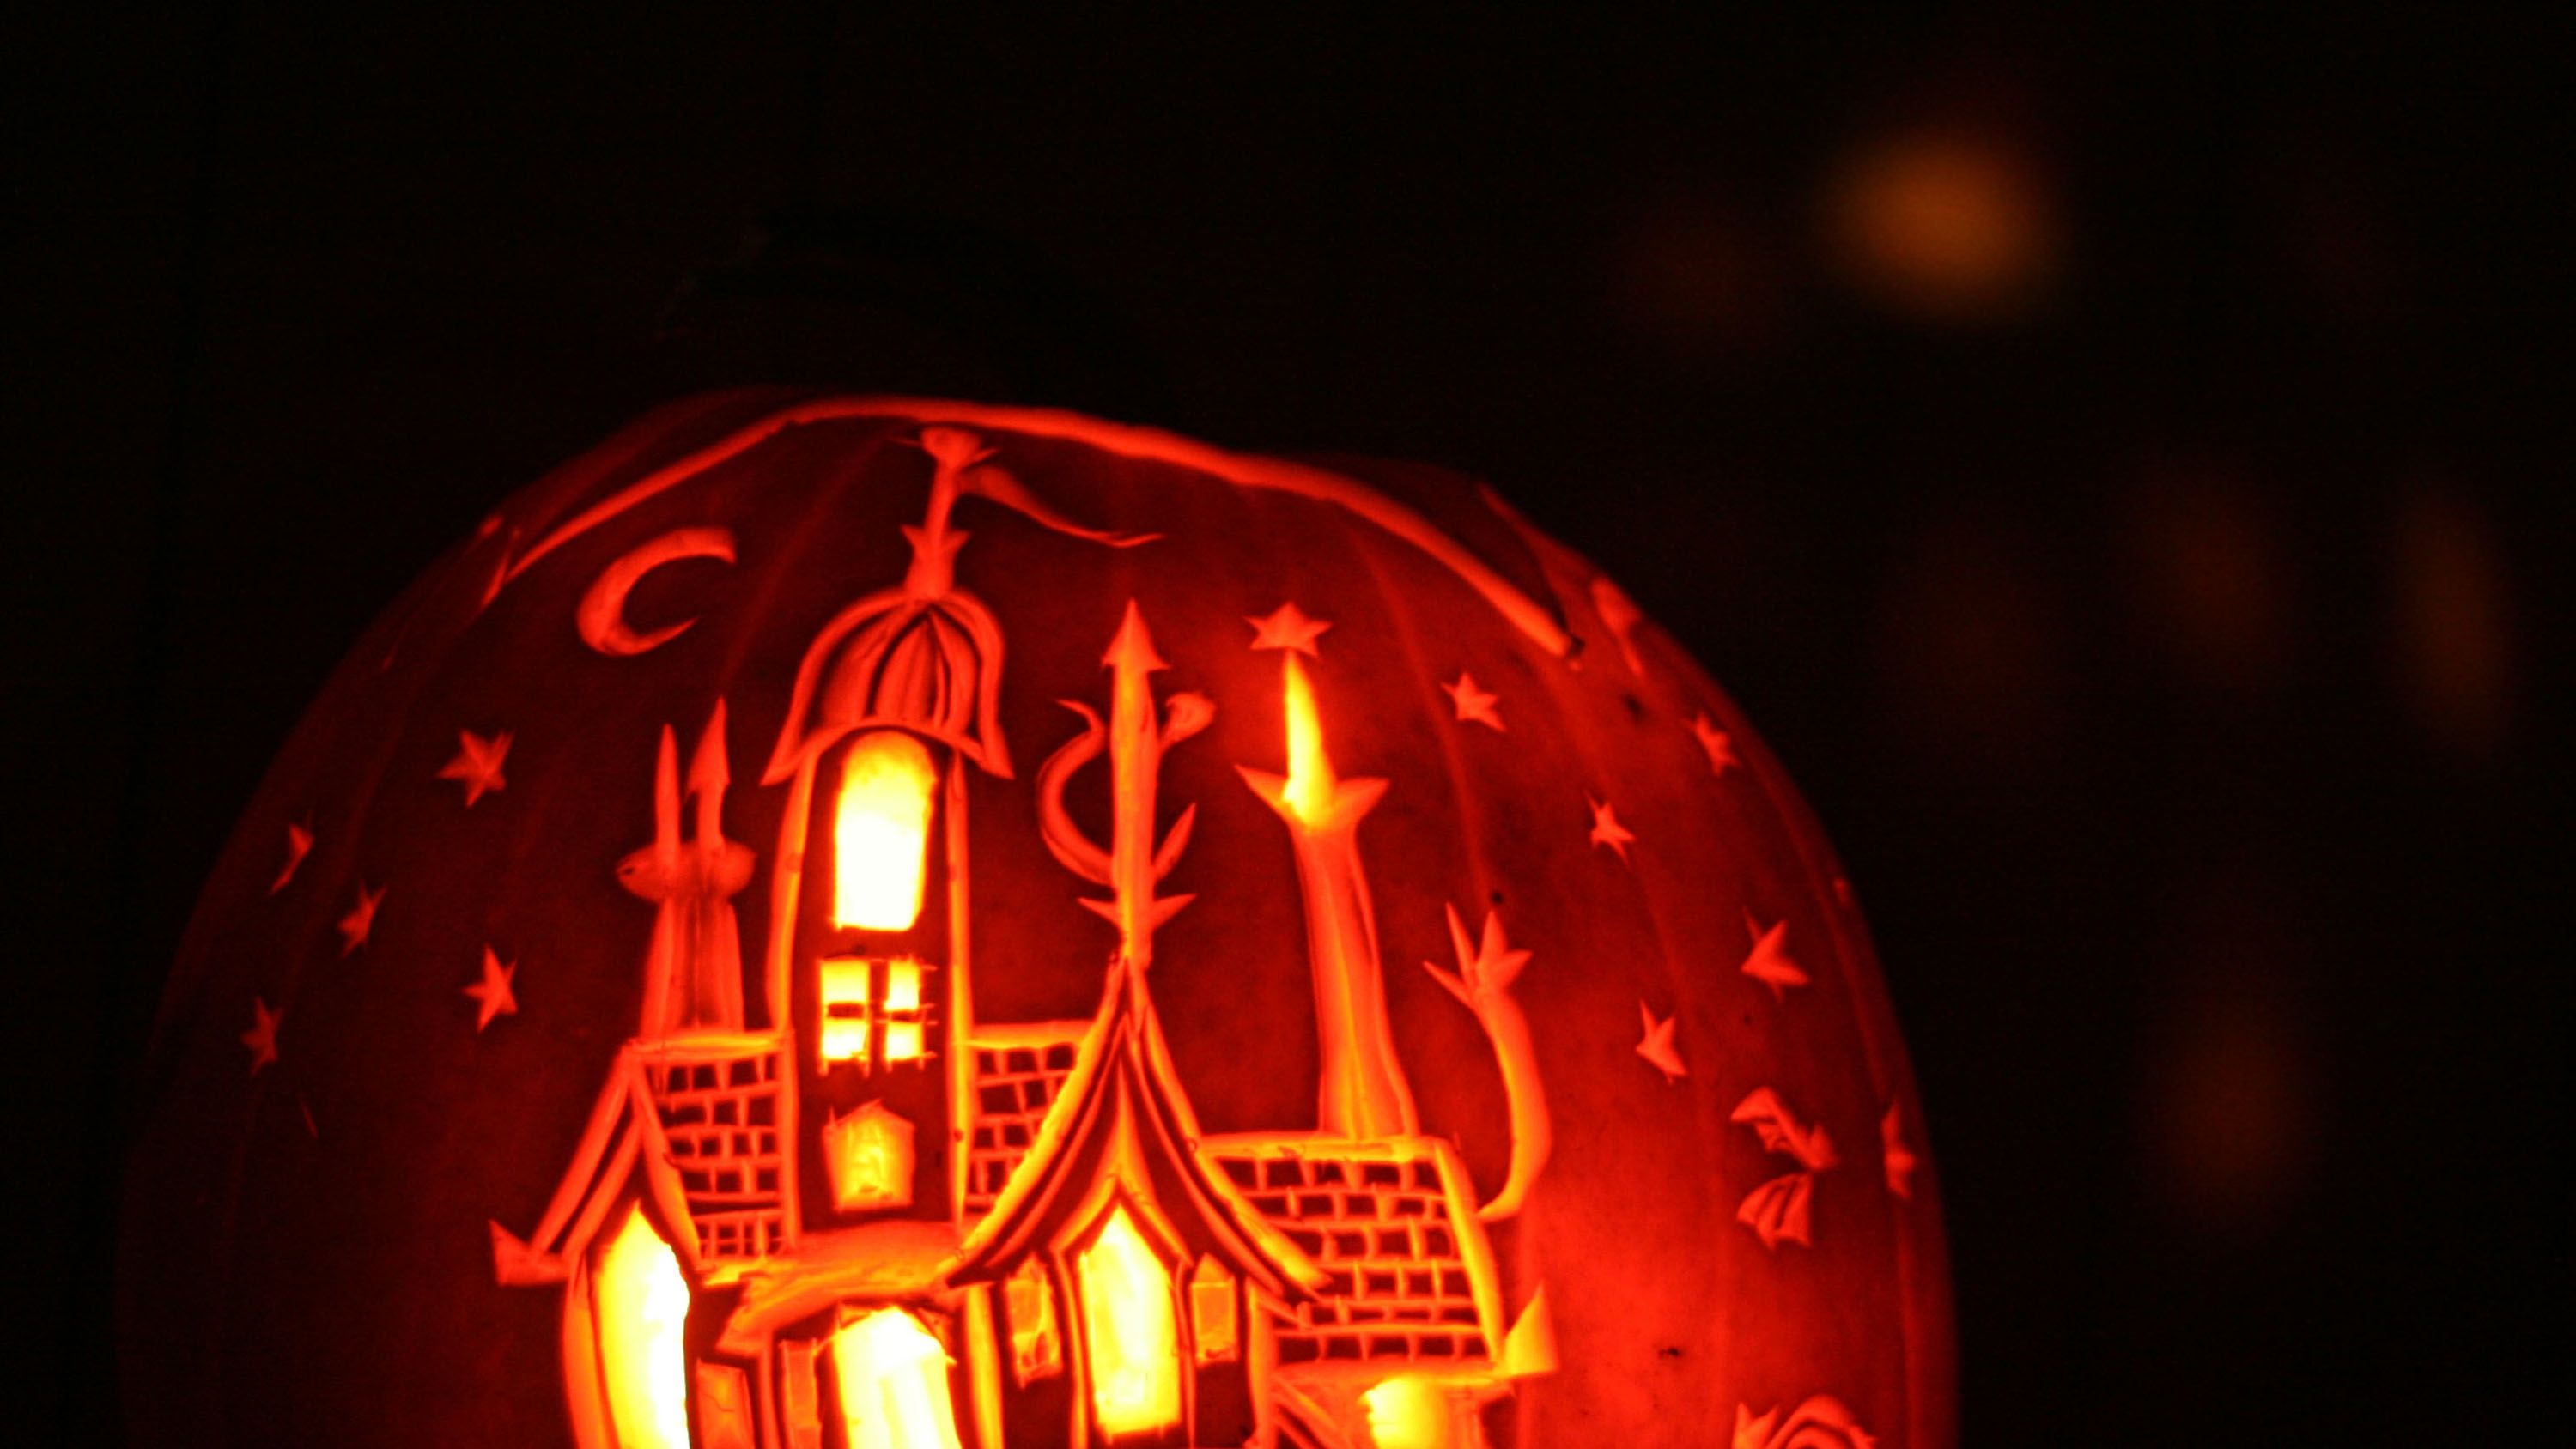 Creative Pumpkin Carving Ideas That Look Ghoulishly Good